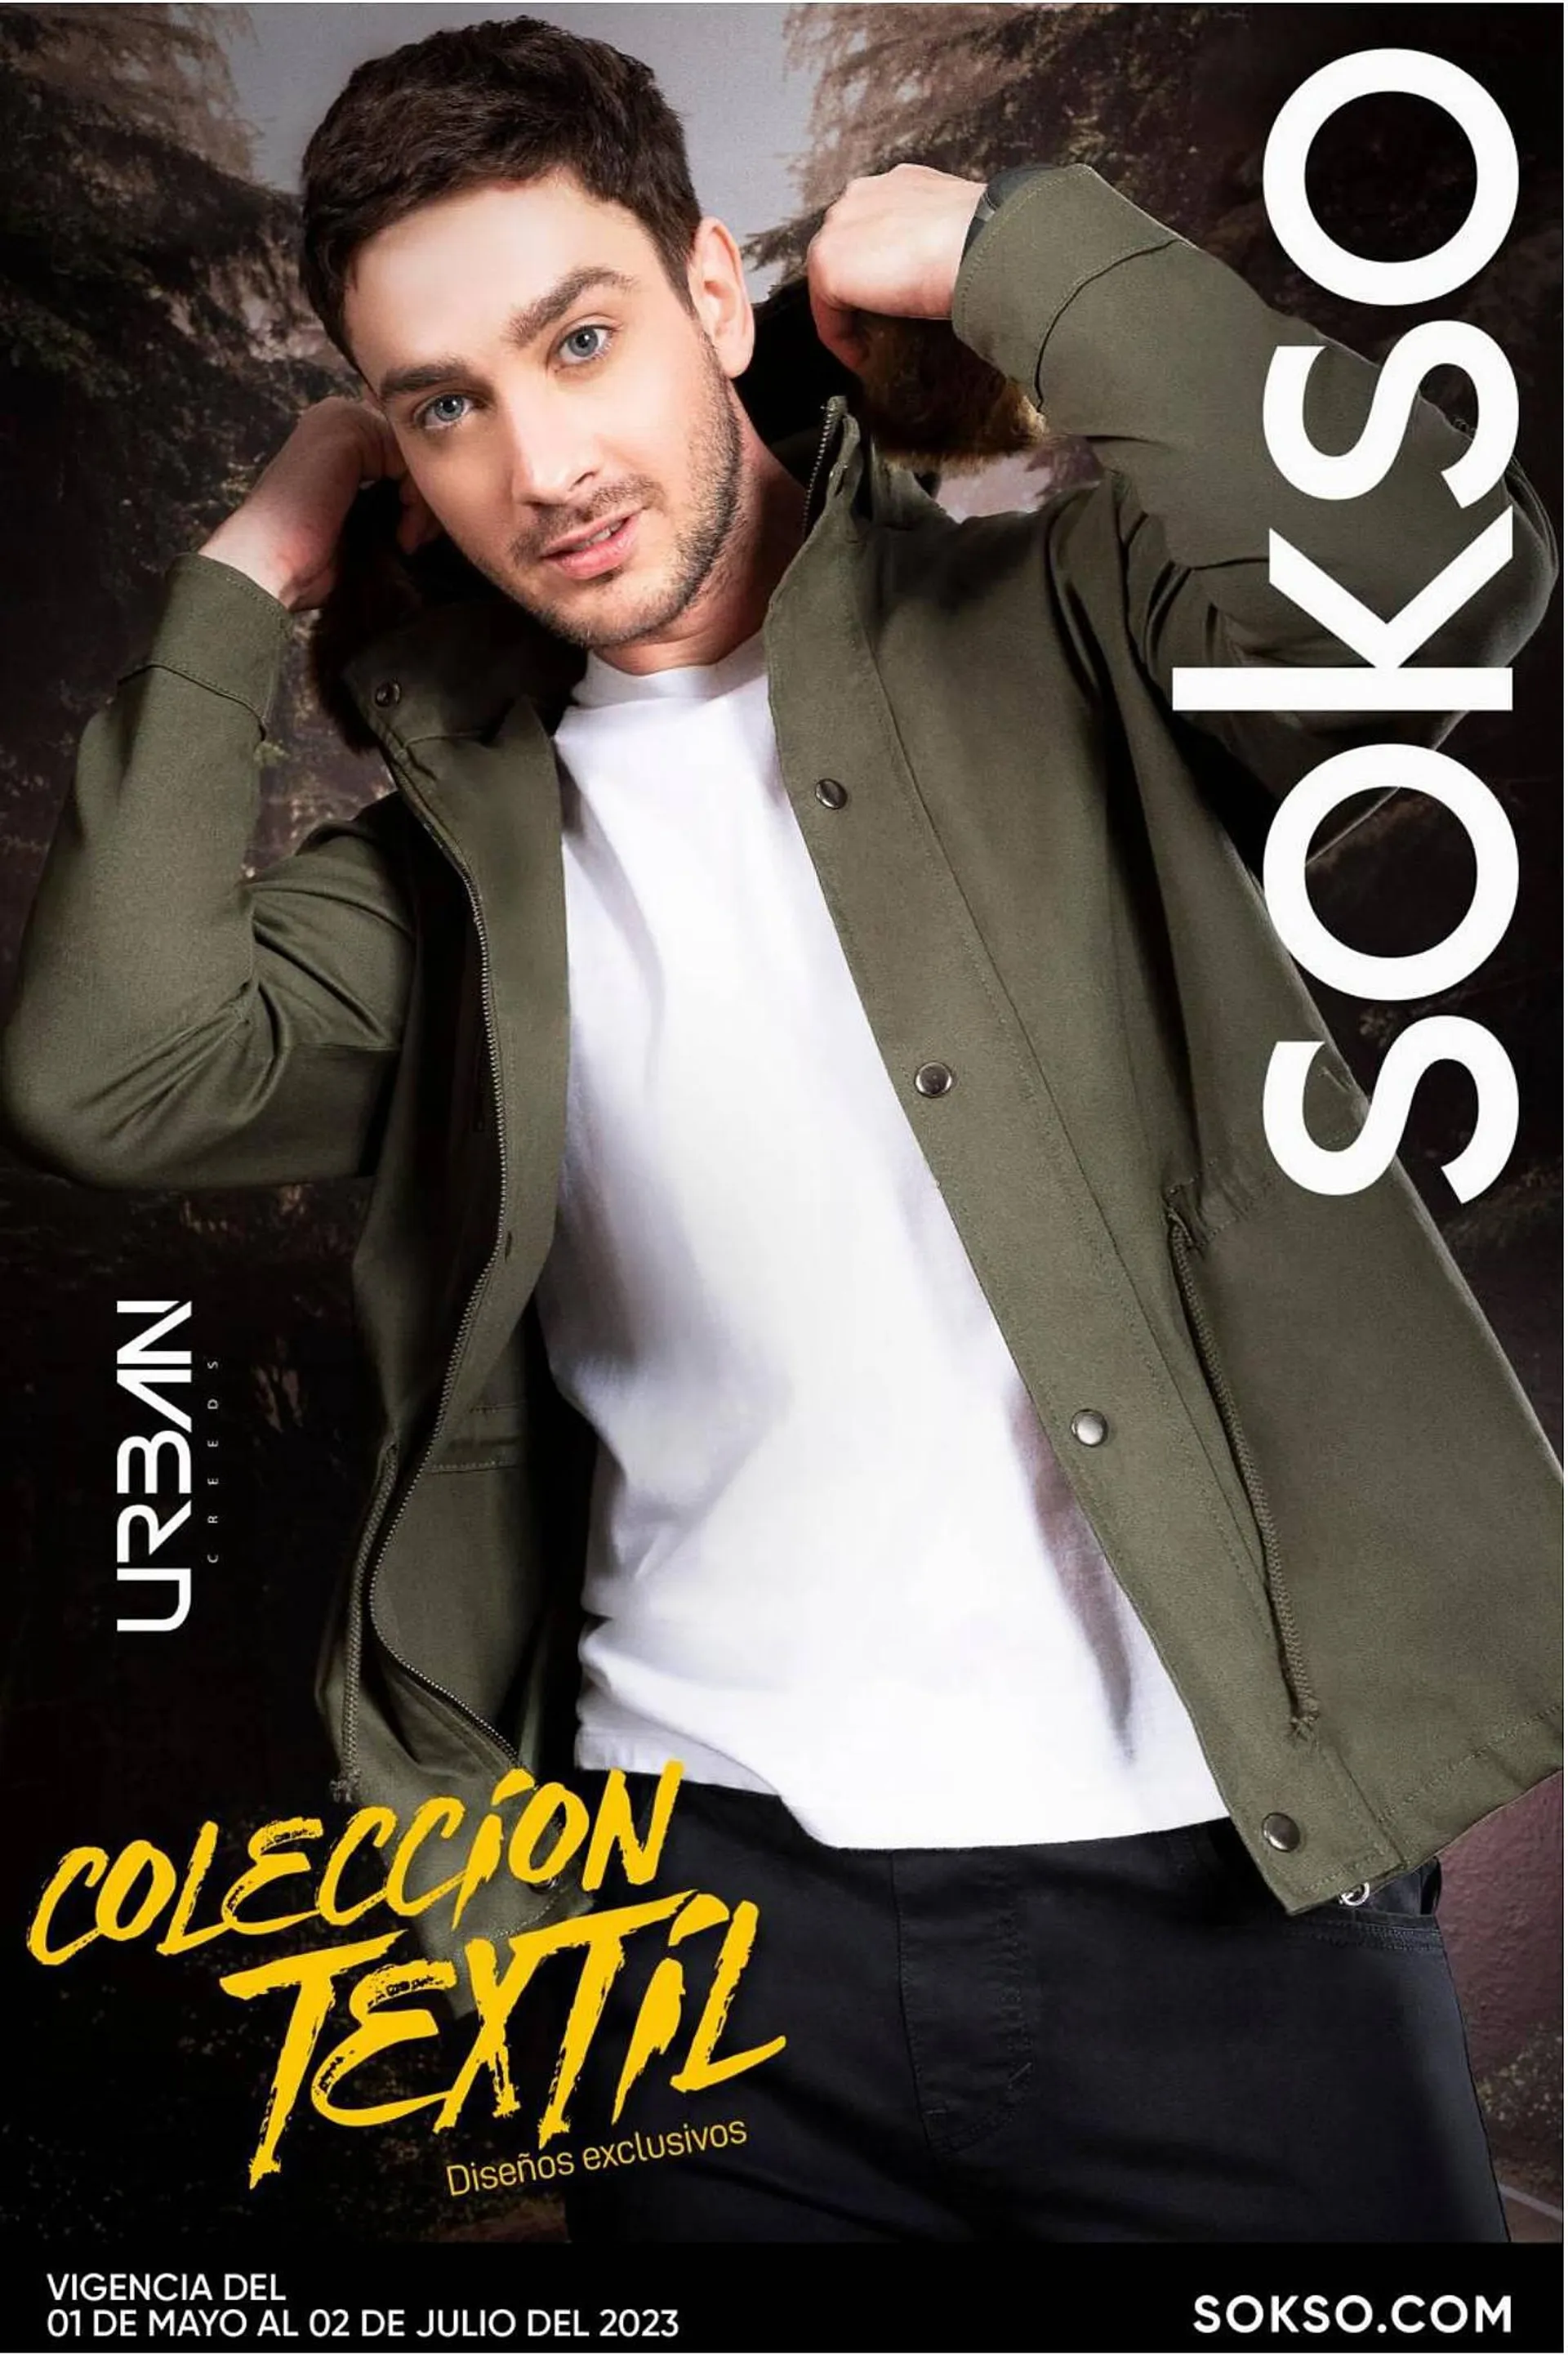 Catálogo Sokso - 1